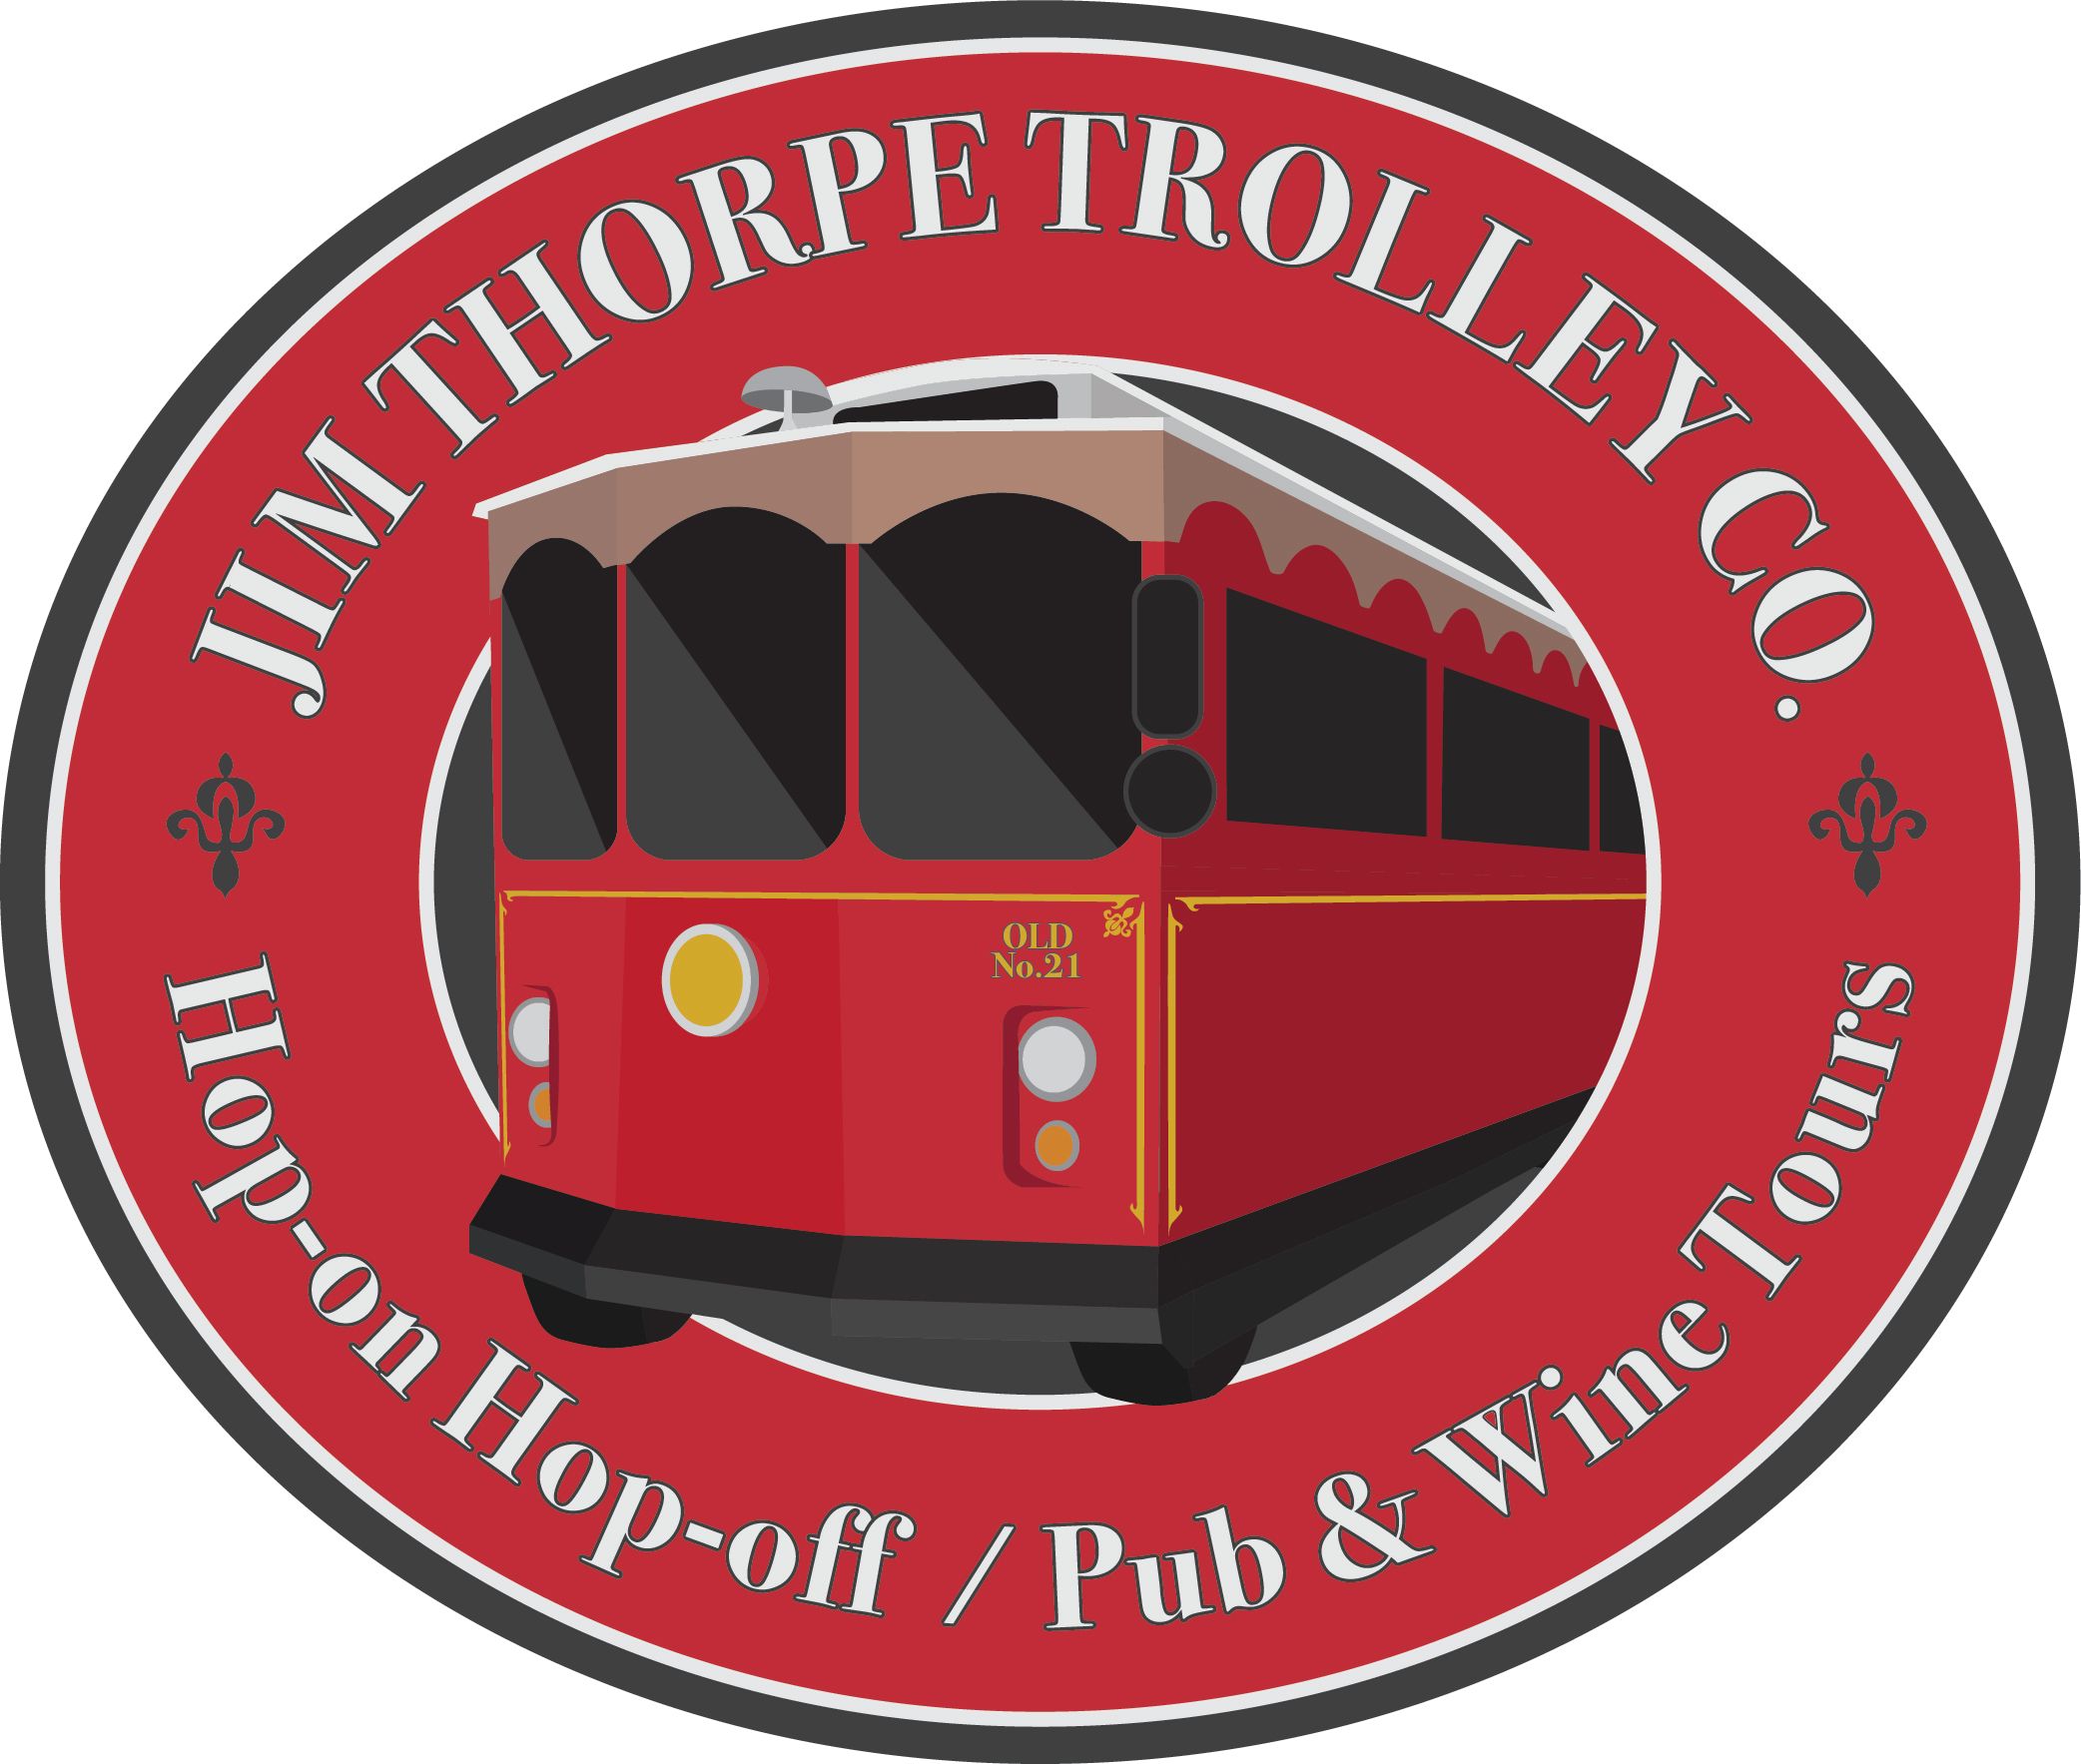 Jim Thorpe Trolley Company, Pocono Region, Historic, Wine and Dinner Tours